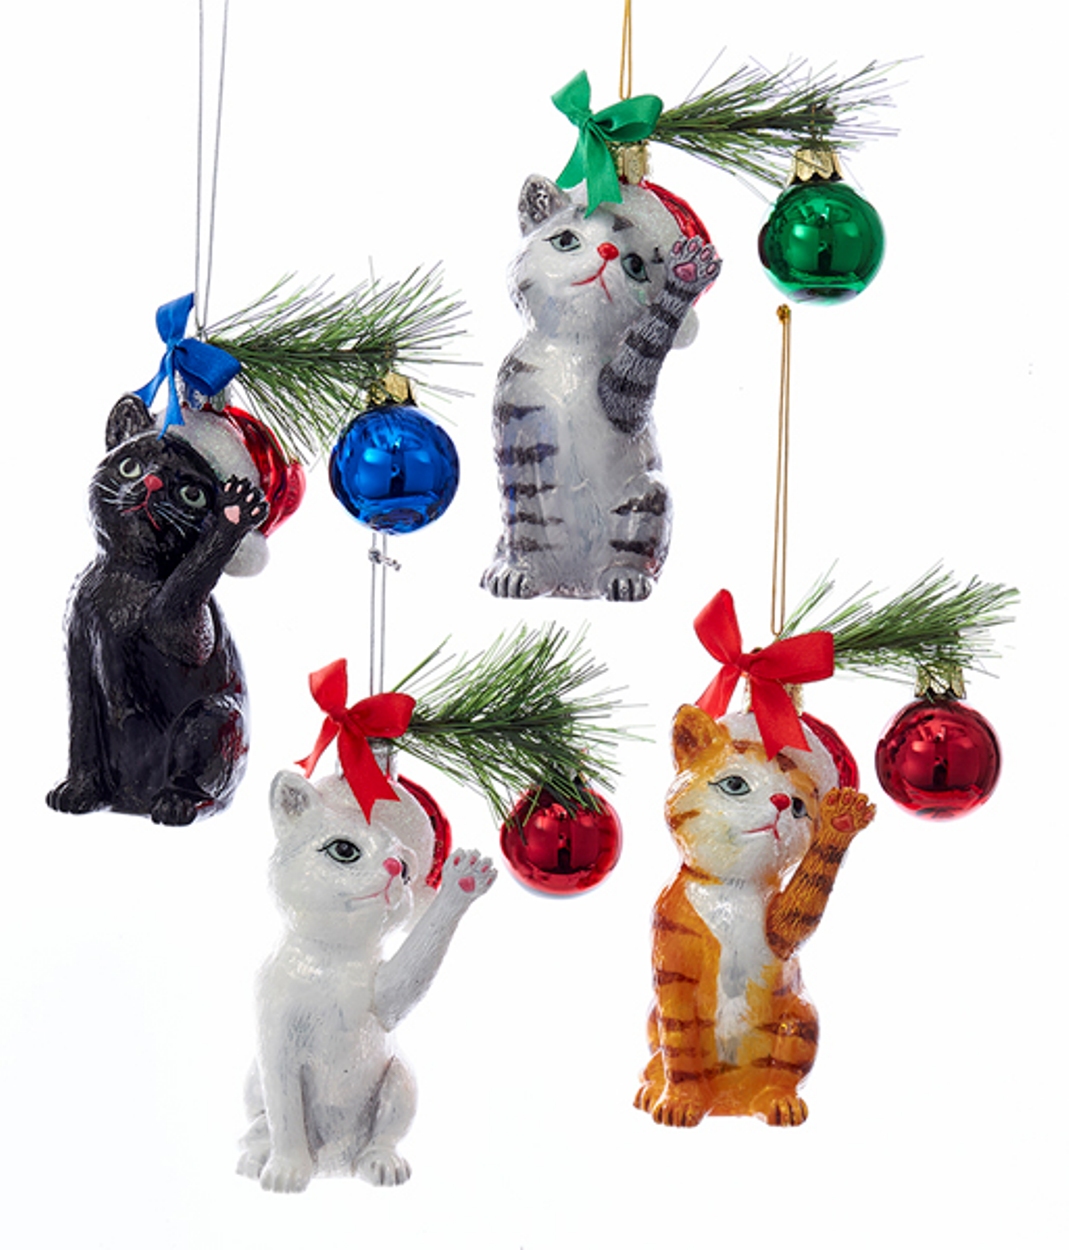 Kurt S. Adler Noble Gems Kitty Cats in Santa Hats Playing Christmas Holiday Ornaments Set of 4